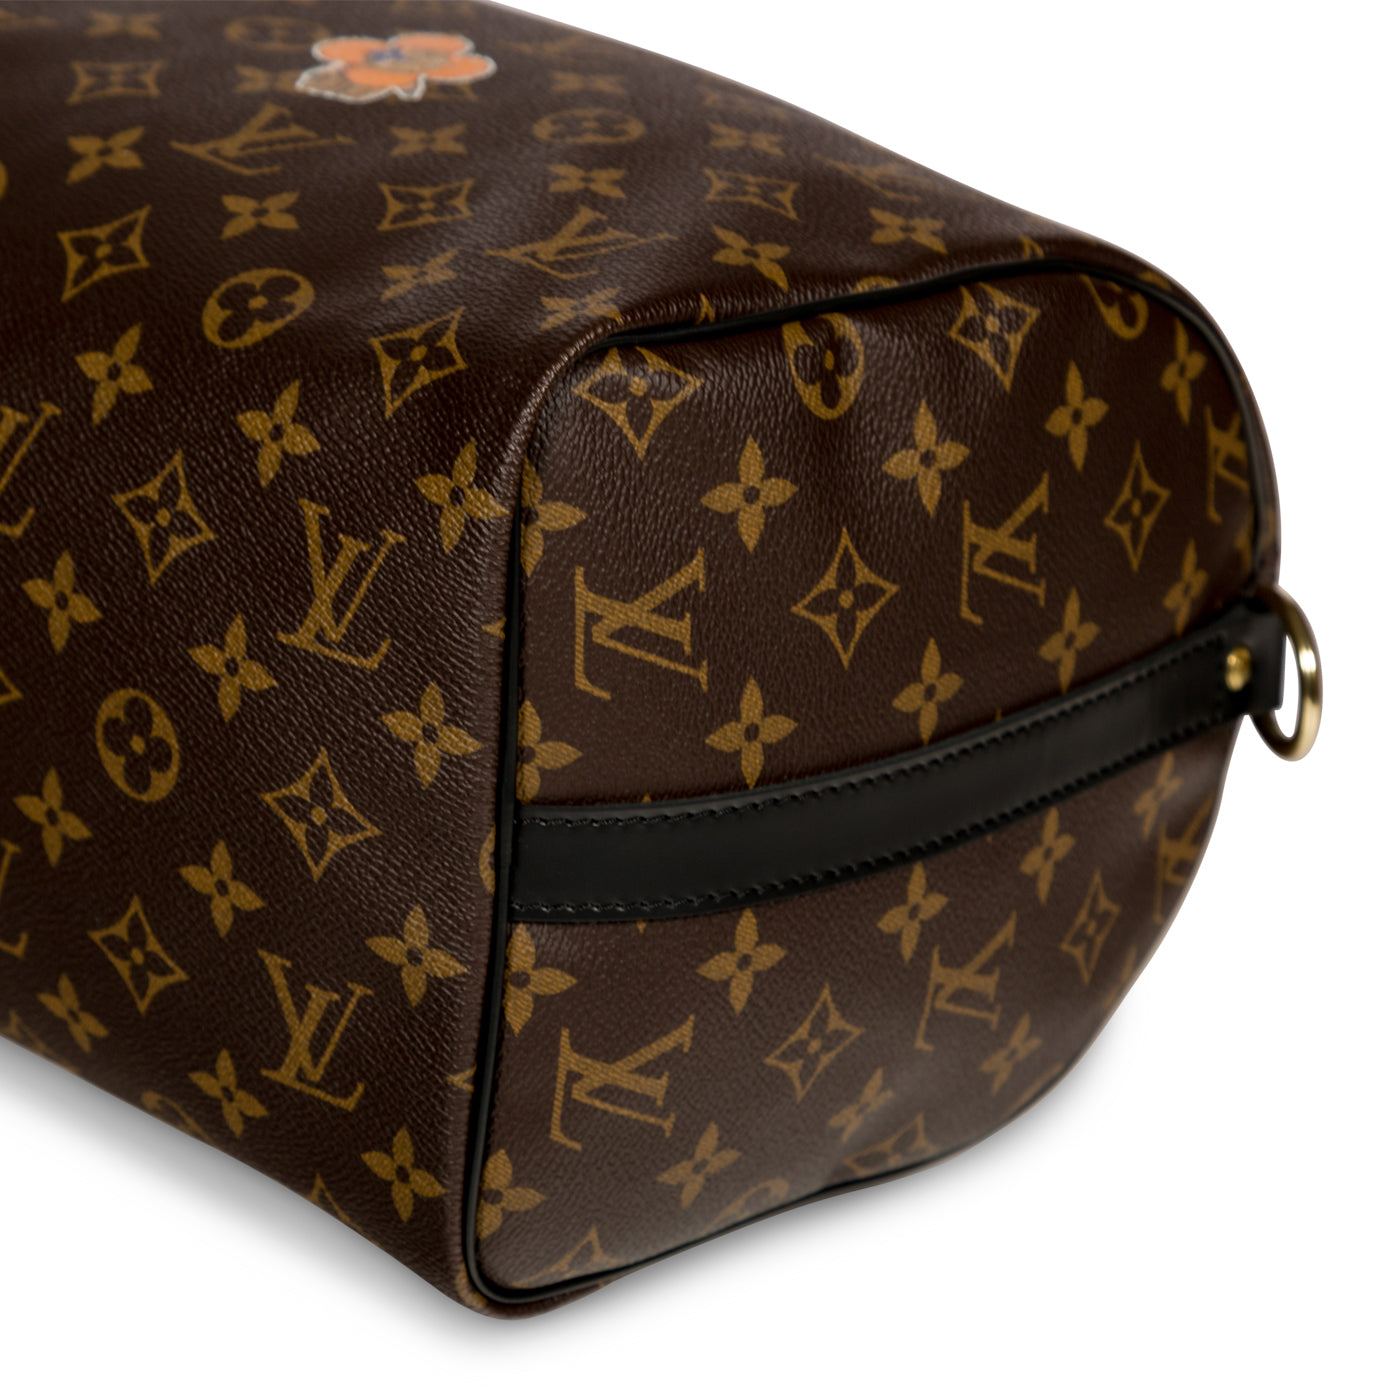 What's in my bag / Louis Vuitton Speedy 30 Bandouliere Monogram 